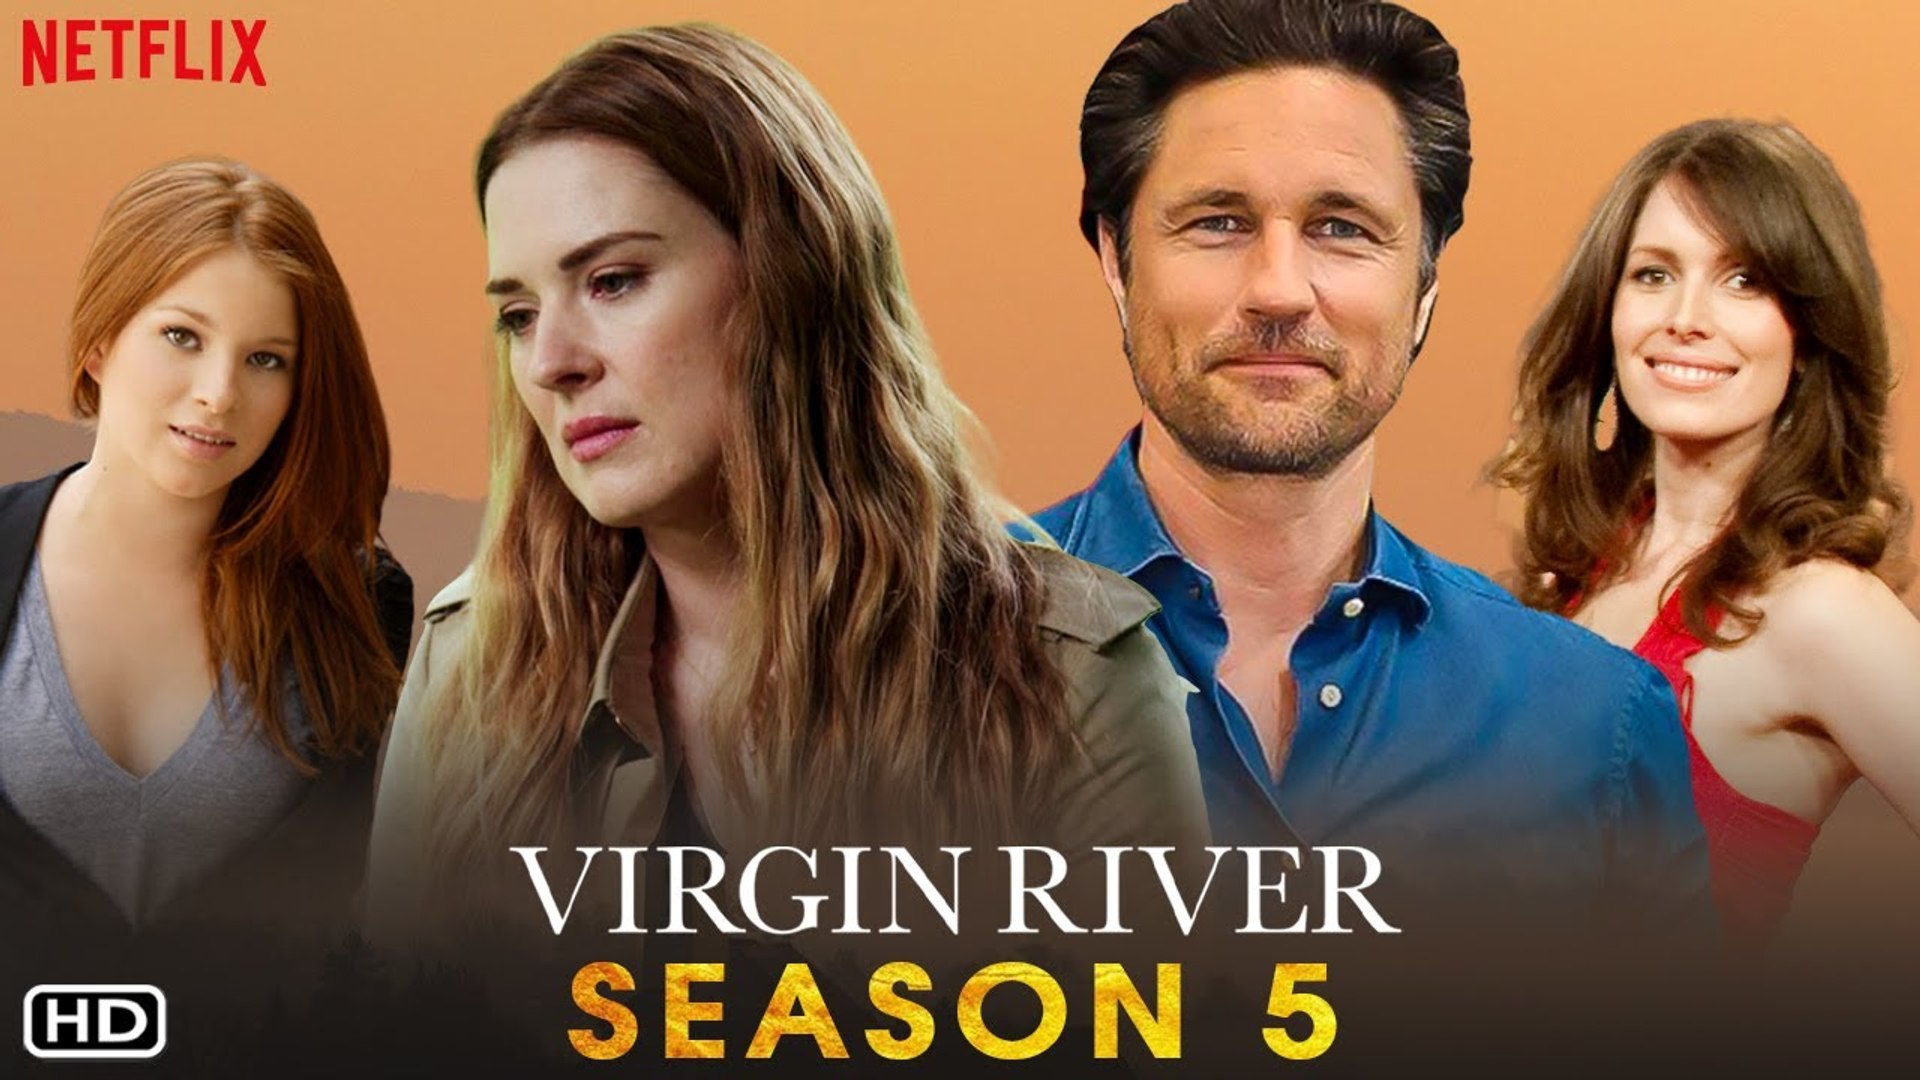 the cast for virgin river